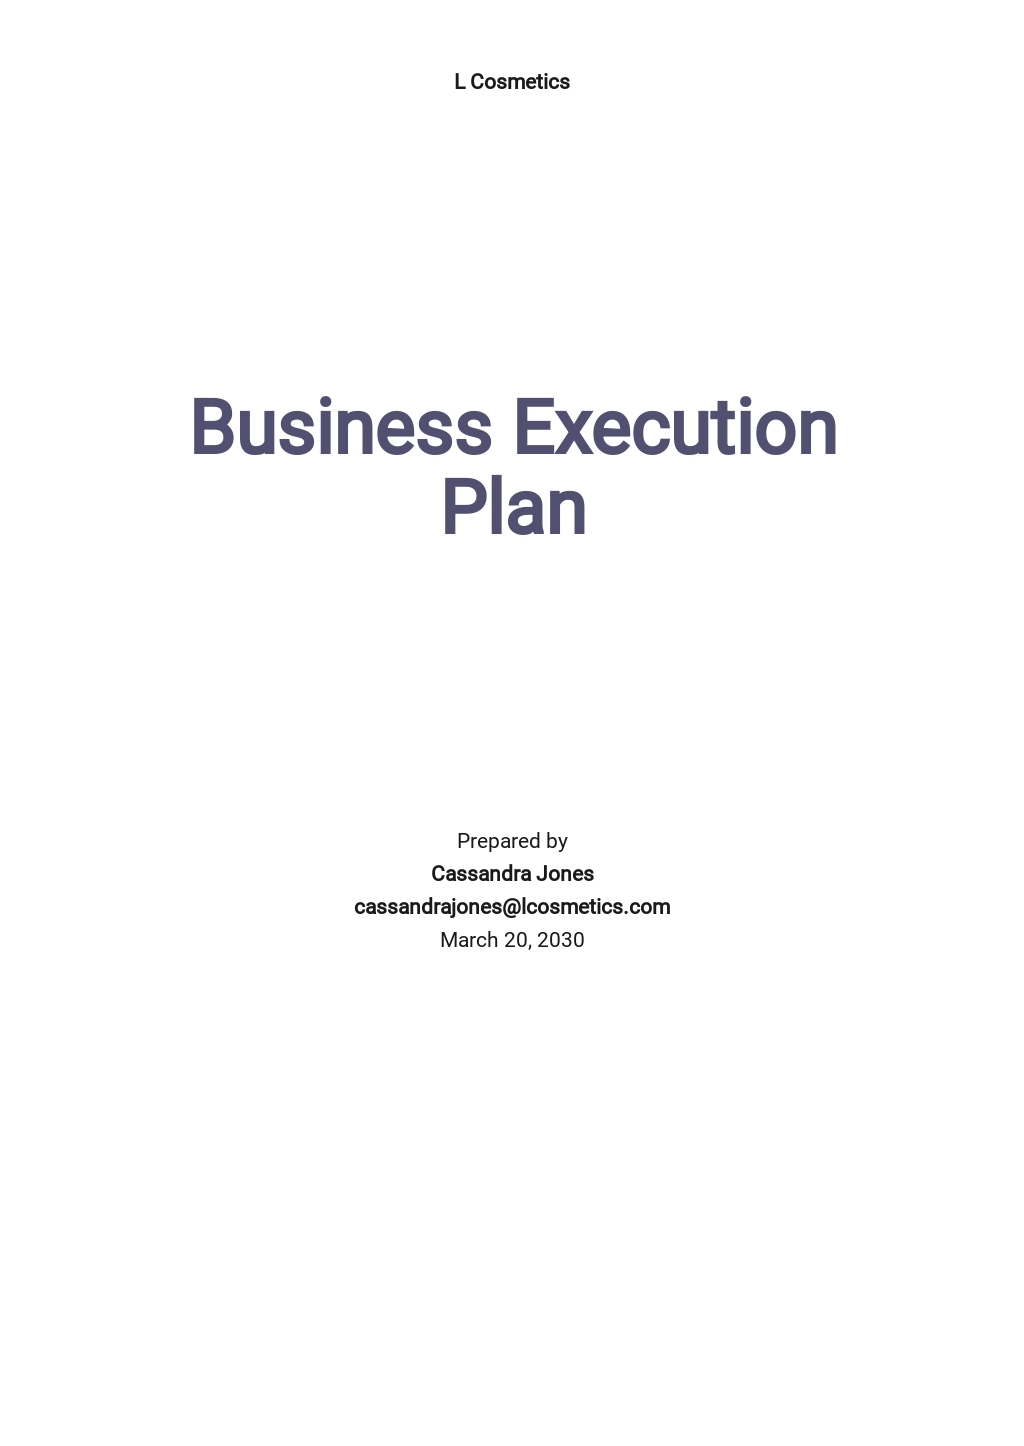 Business Execution Plan Template.jpe